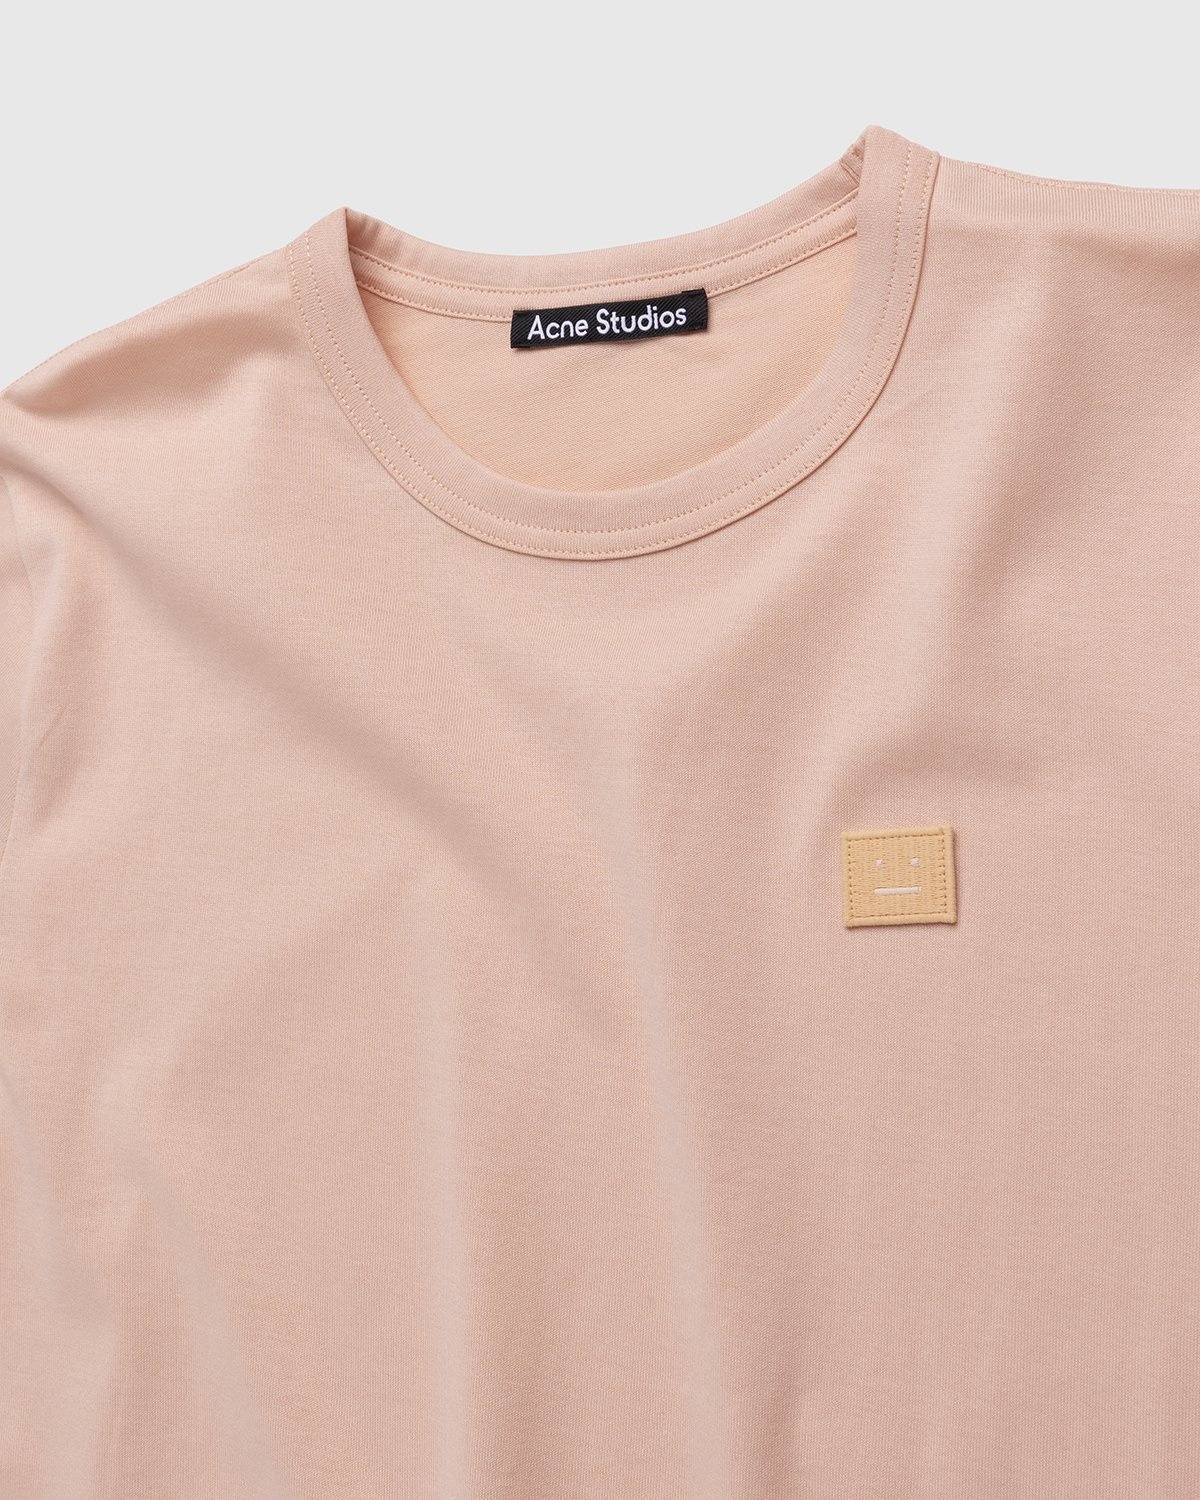 Acne Studios – Slim Fit T-Shirt Powder Pink - T-Shirts - Pink - Image 4